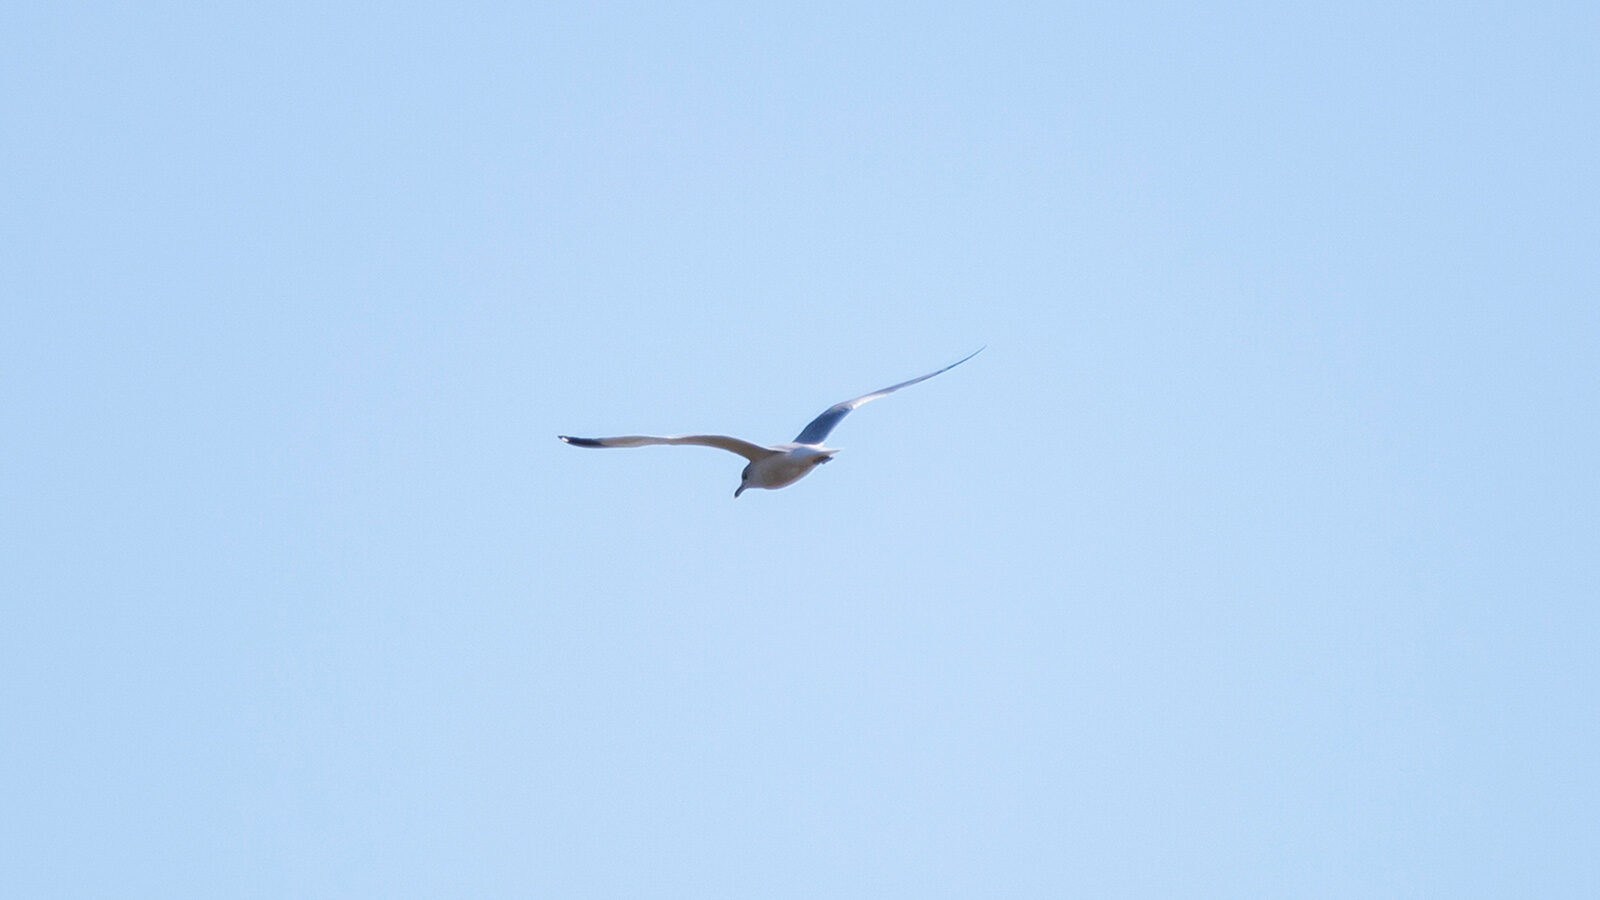 Ring-billed gull flying through blue sky